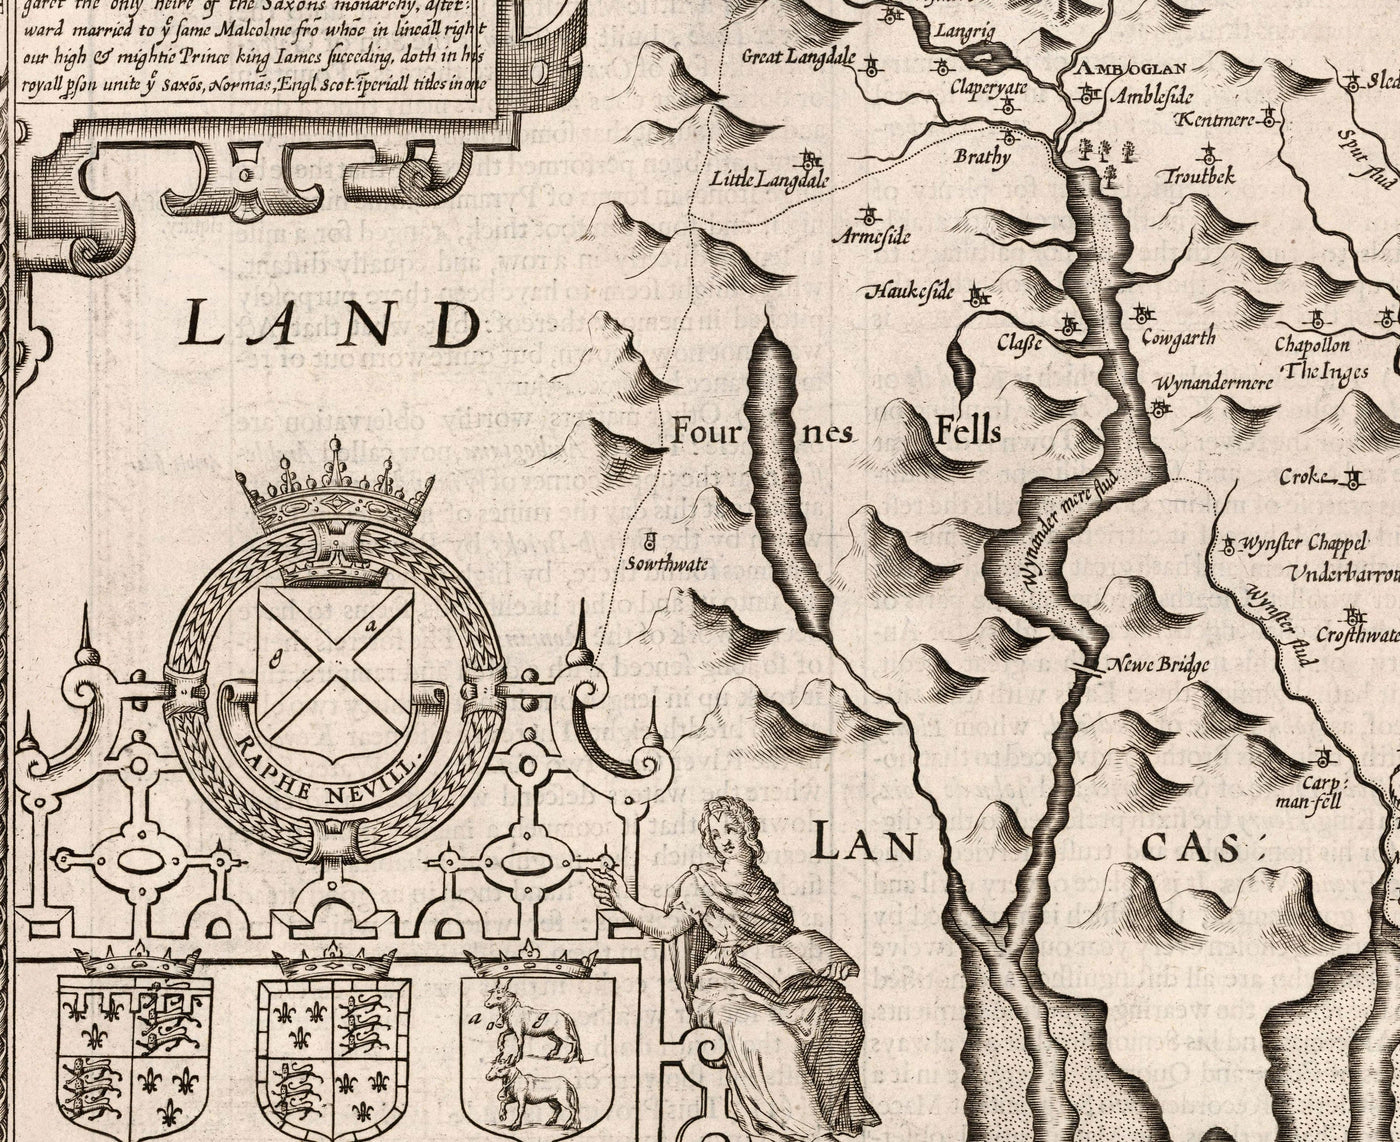 Old Monochrome Carte de Westmorland, 1611 par John Speed ​​- District Lake, Cumbria, Kendal, Windermere, Grasmere